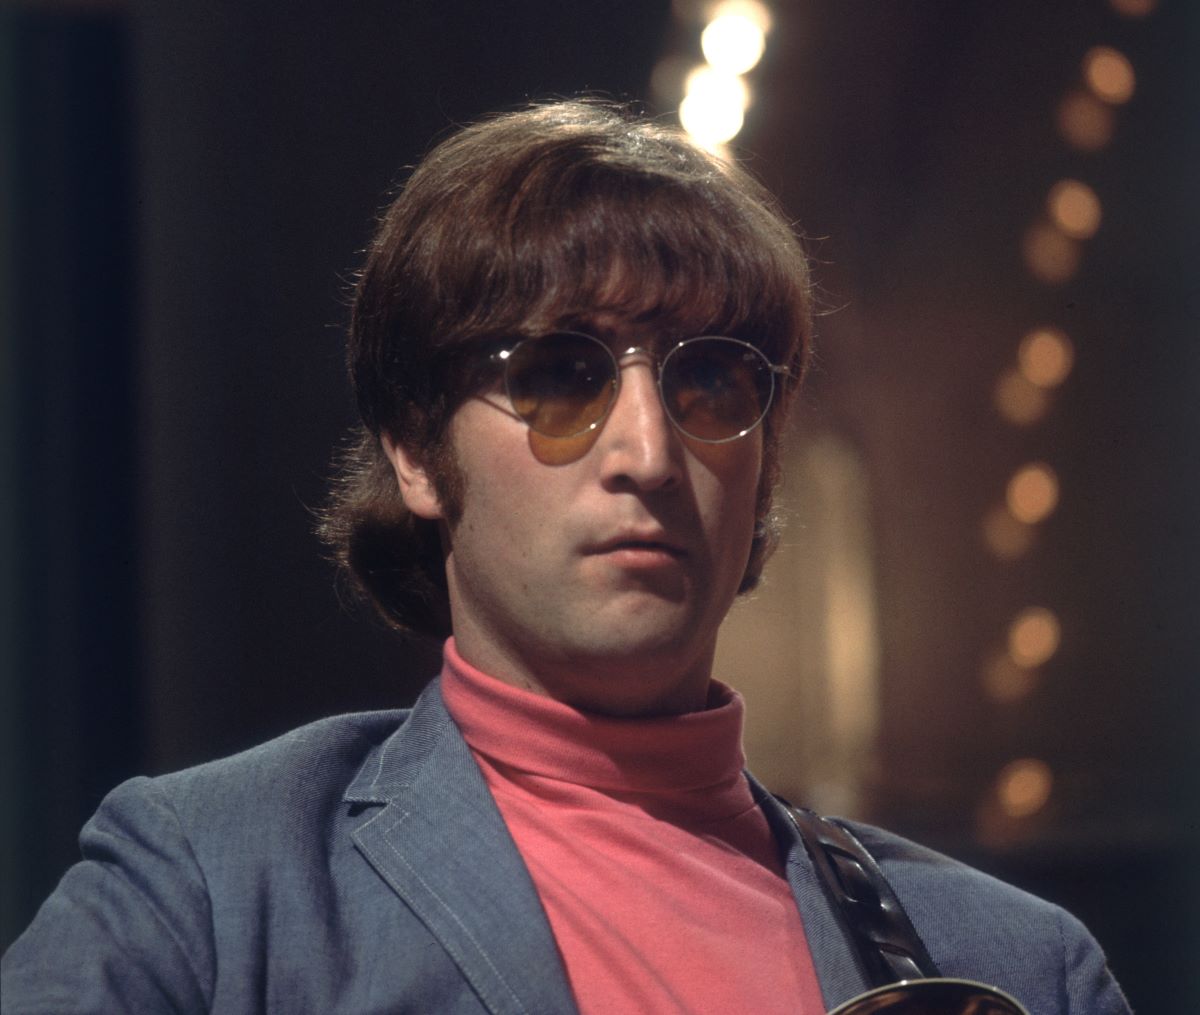 John Lennon wears a red turtleneck, blue jacket, and sunglasses.